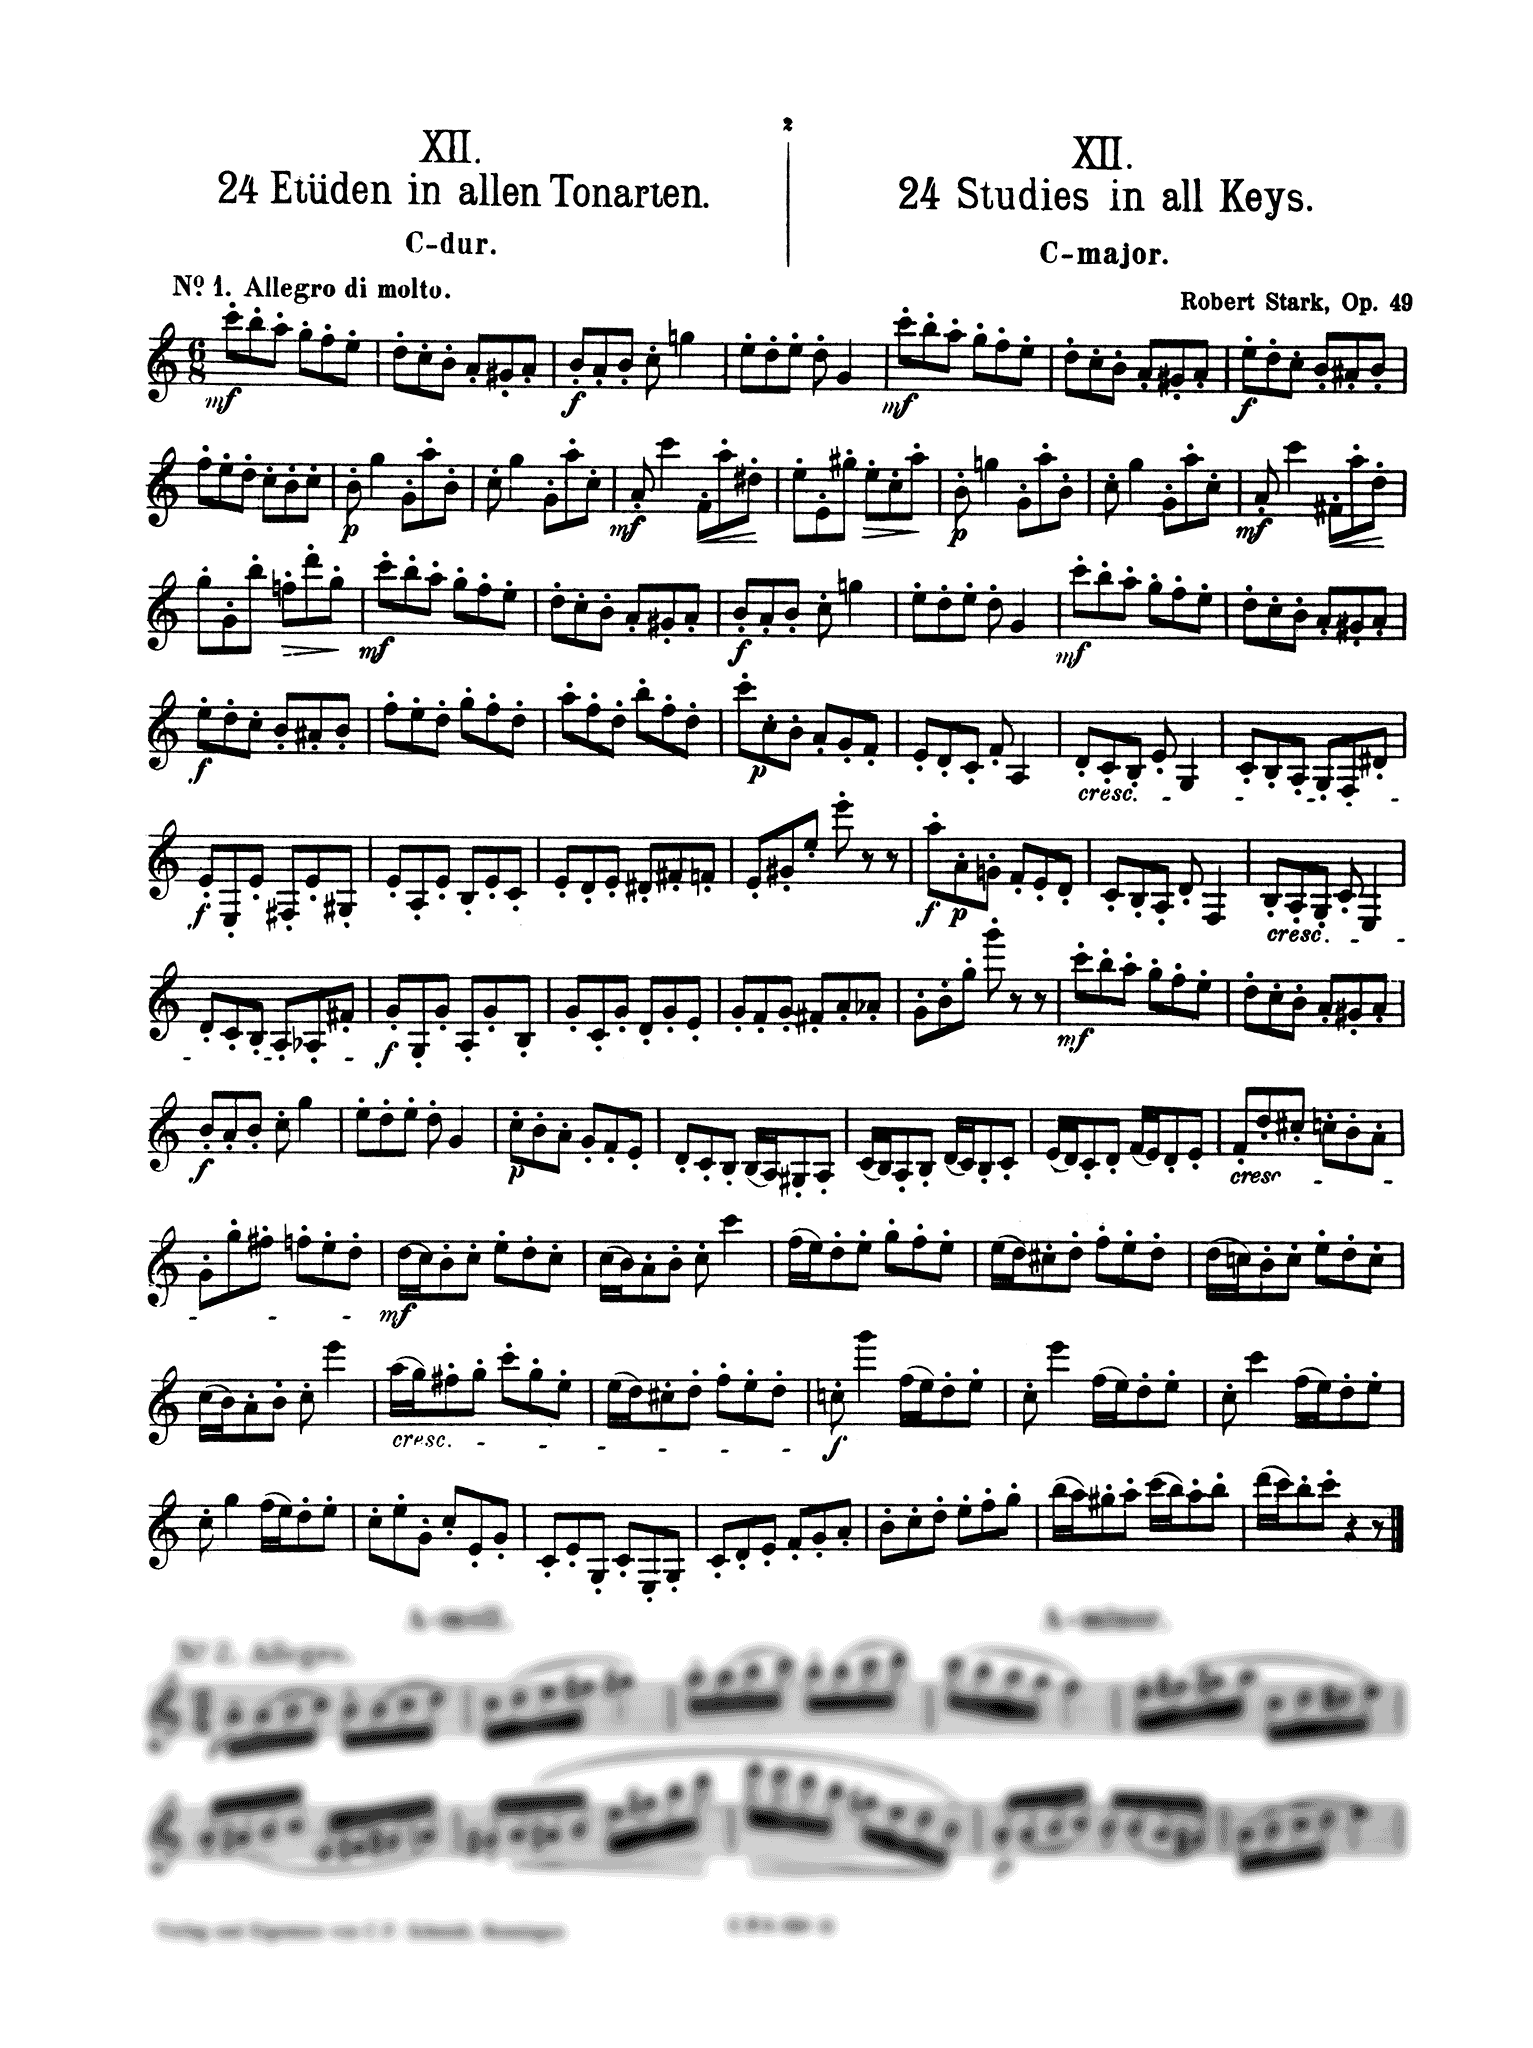 Stark Clarinet Method, Op. 49, Vol. 2: Section 2 (24 Studies in All Keys) page 2